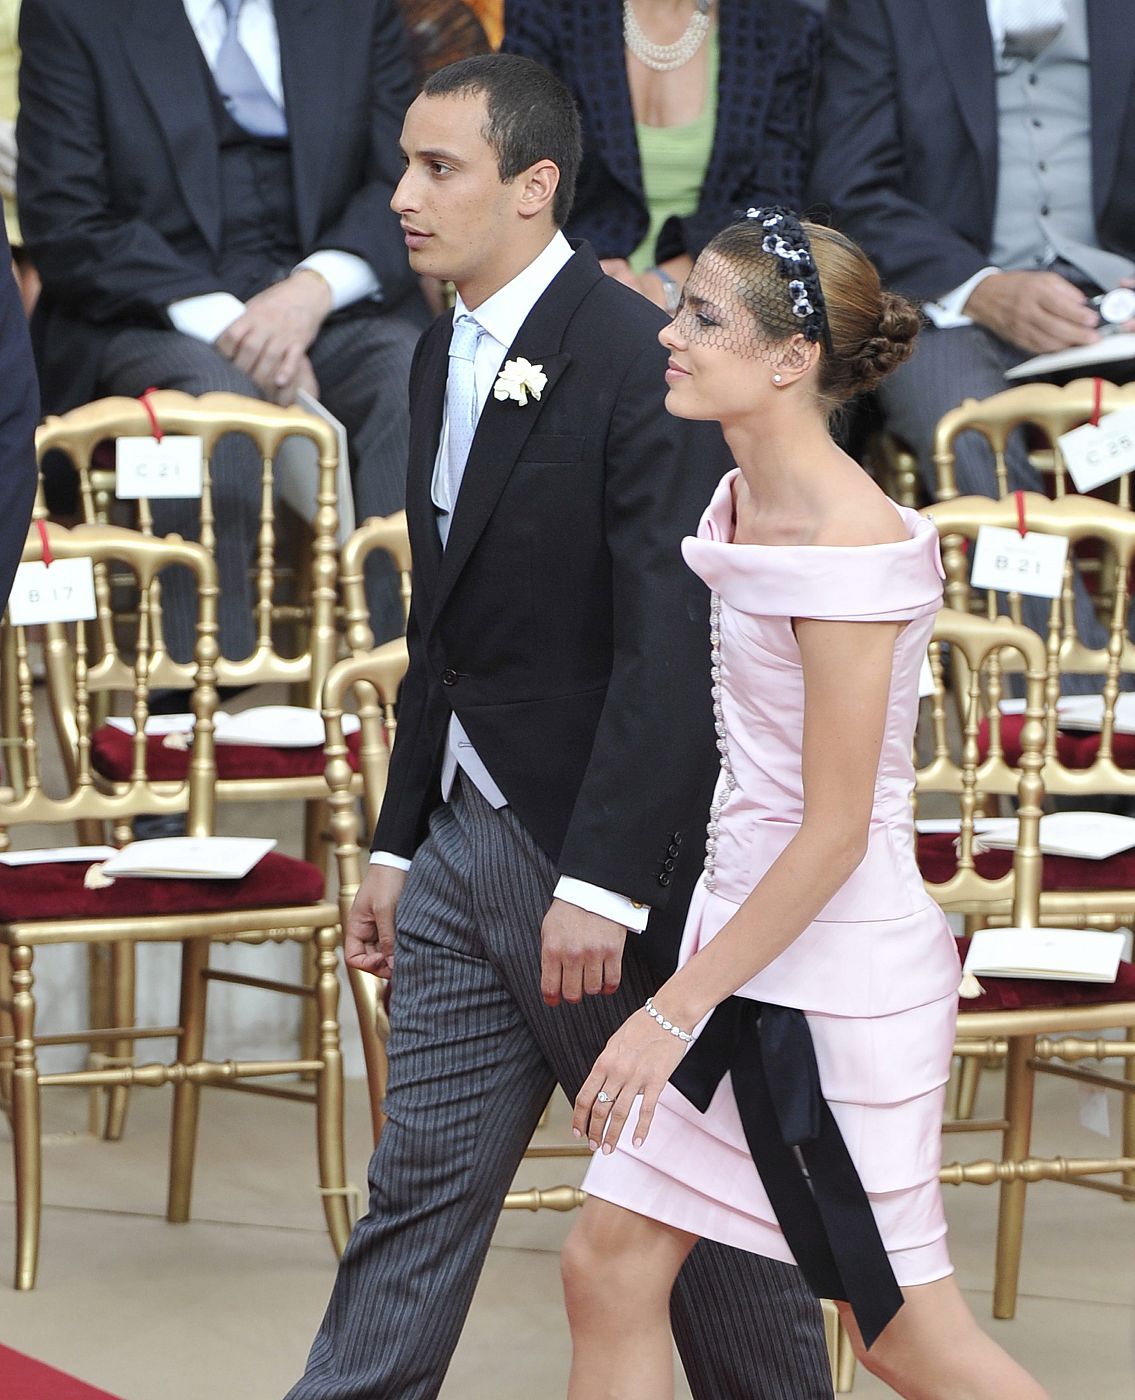 La hija de la Princesa Carolina de Mónaco, Carlota Casiraghi (a la derecha) y su novio en la boda.